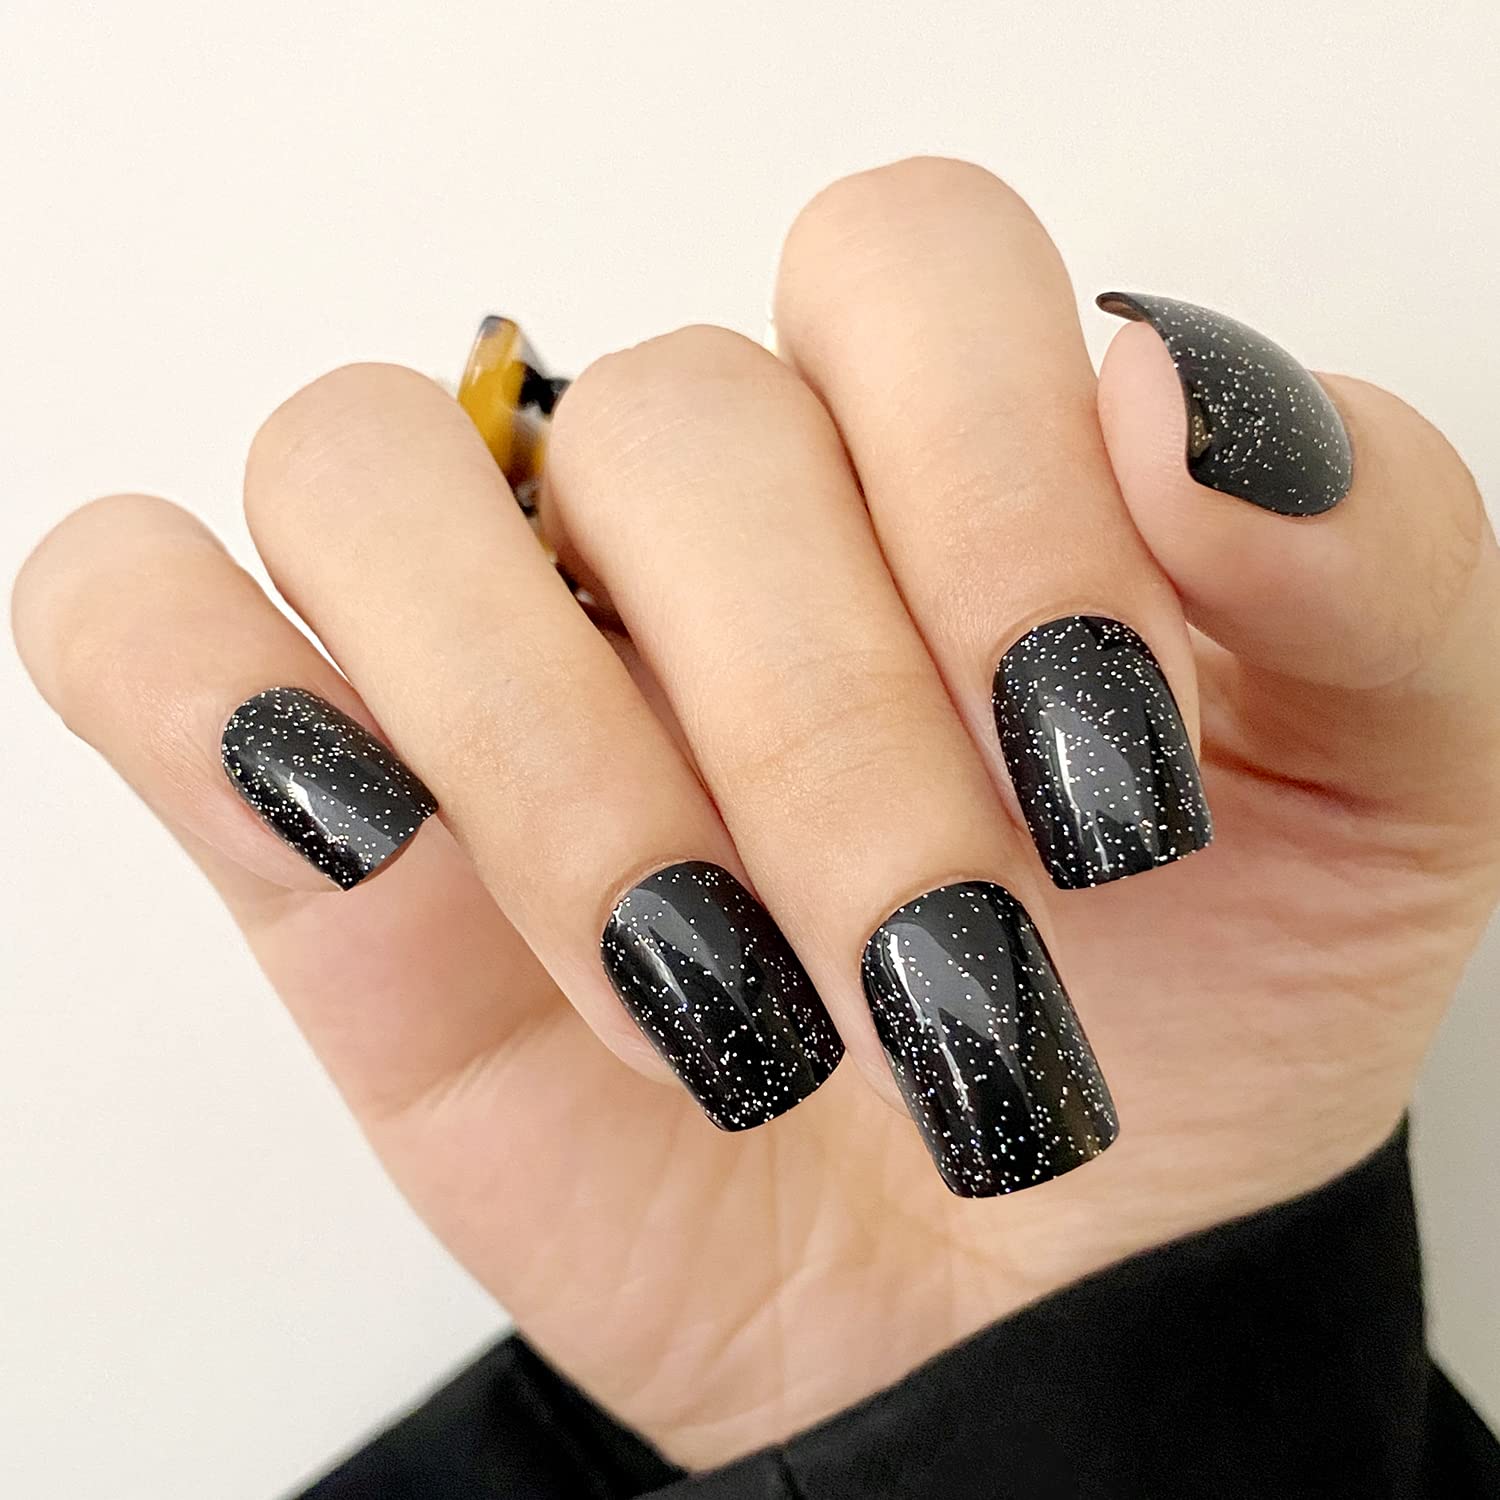 Acrylic nails - black sparkle design - YouTube